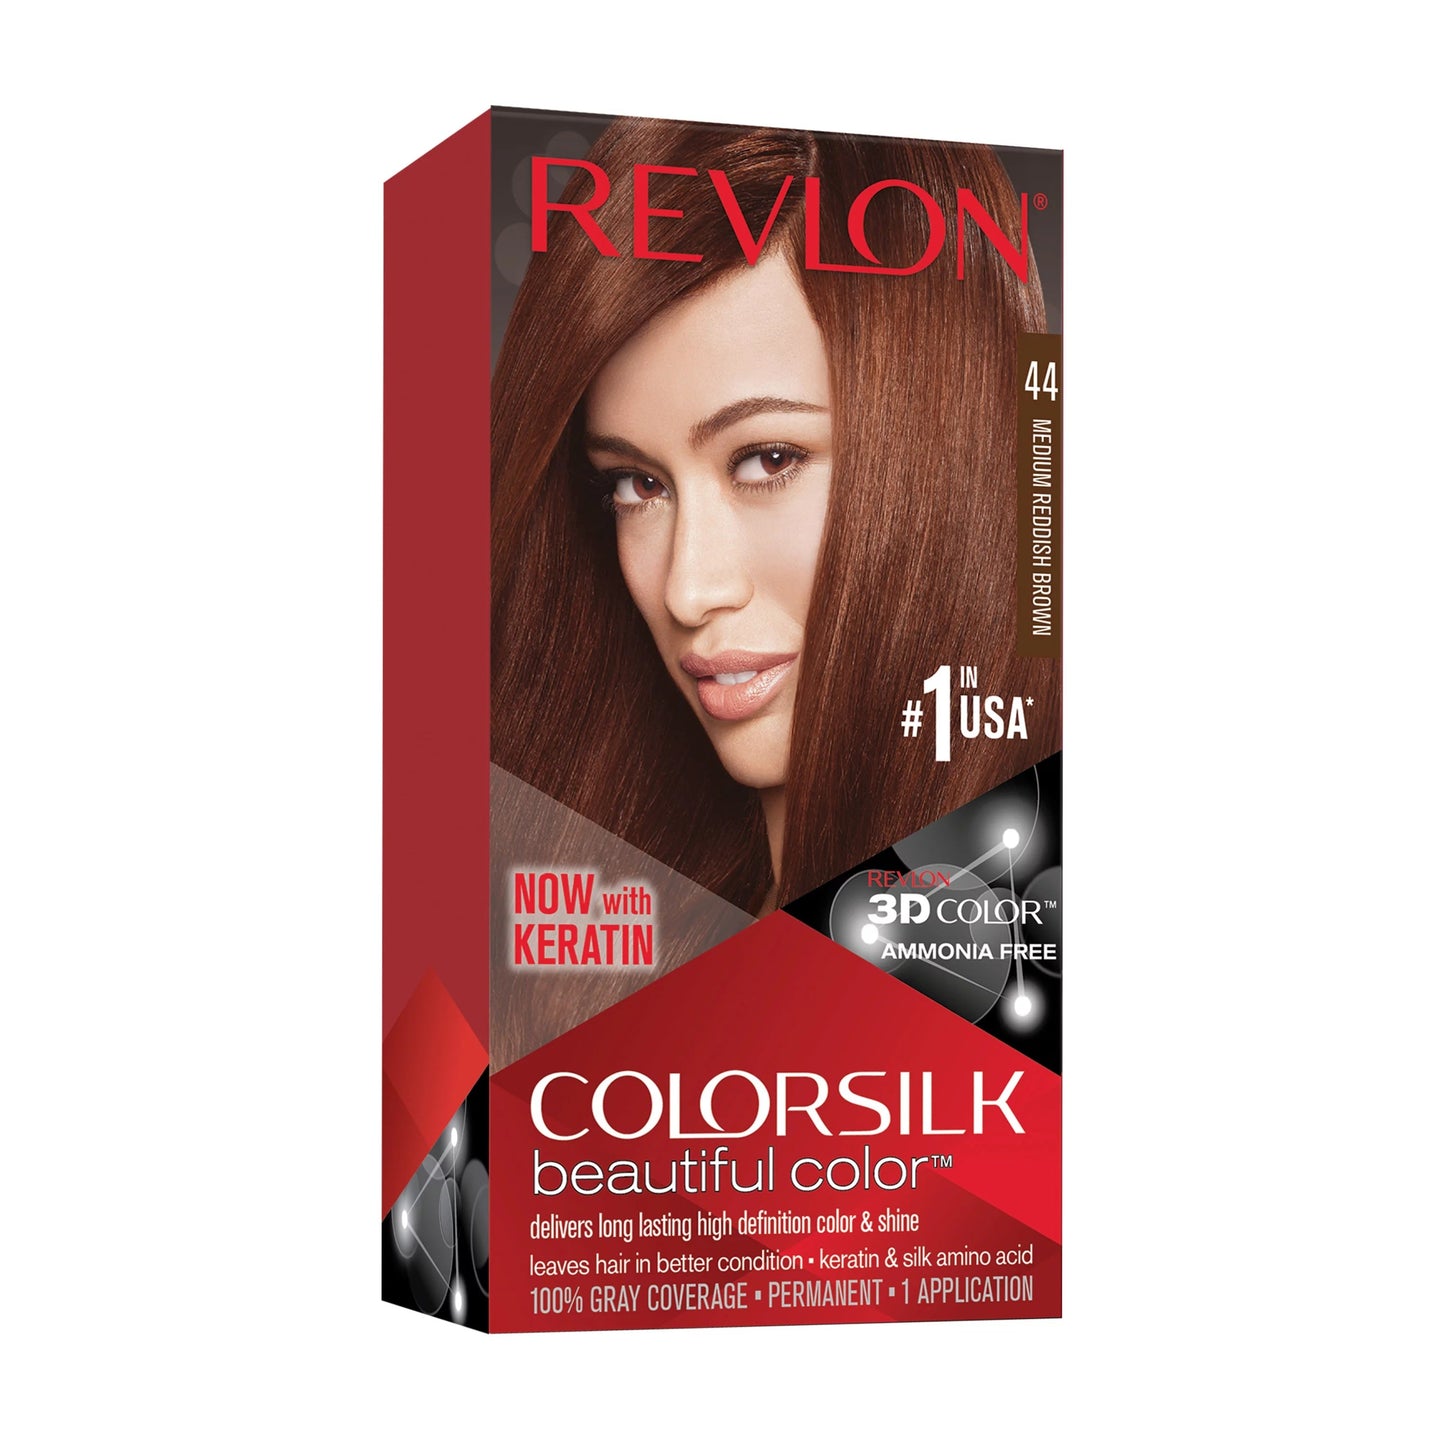 Revlon Colorsilk Hair Color 44 Medium Reddish Brown USA - 1ct/3PK<br>